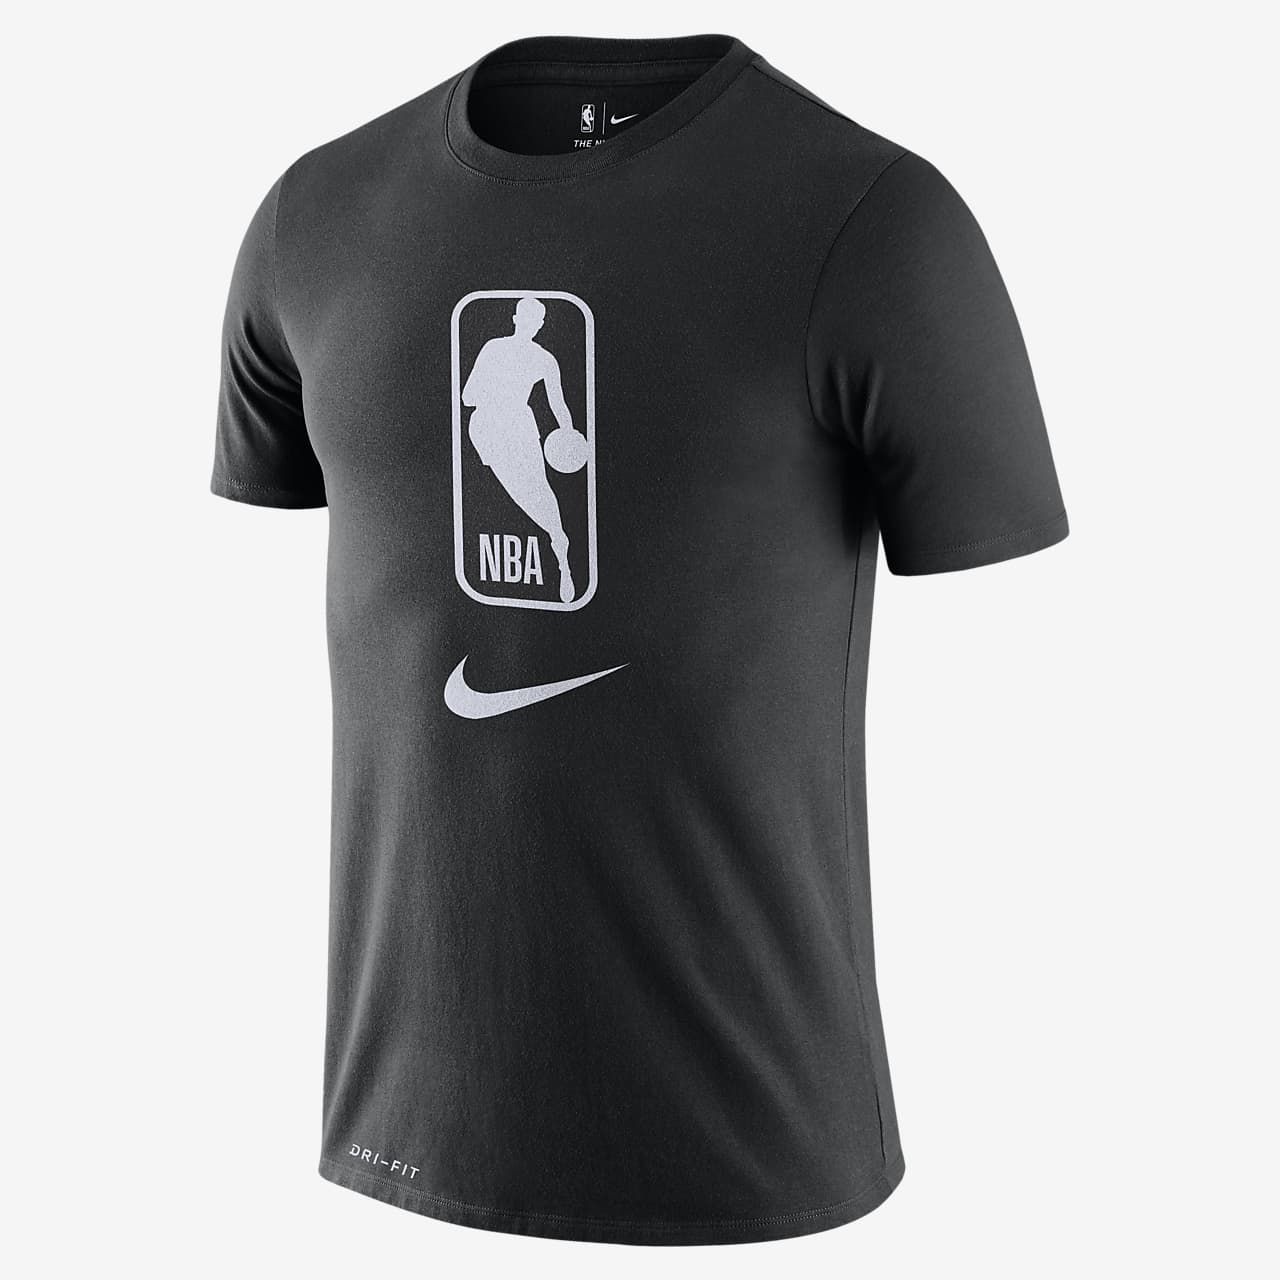 Team 31 Nike NBA-herenshirt met Dri-FIT